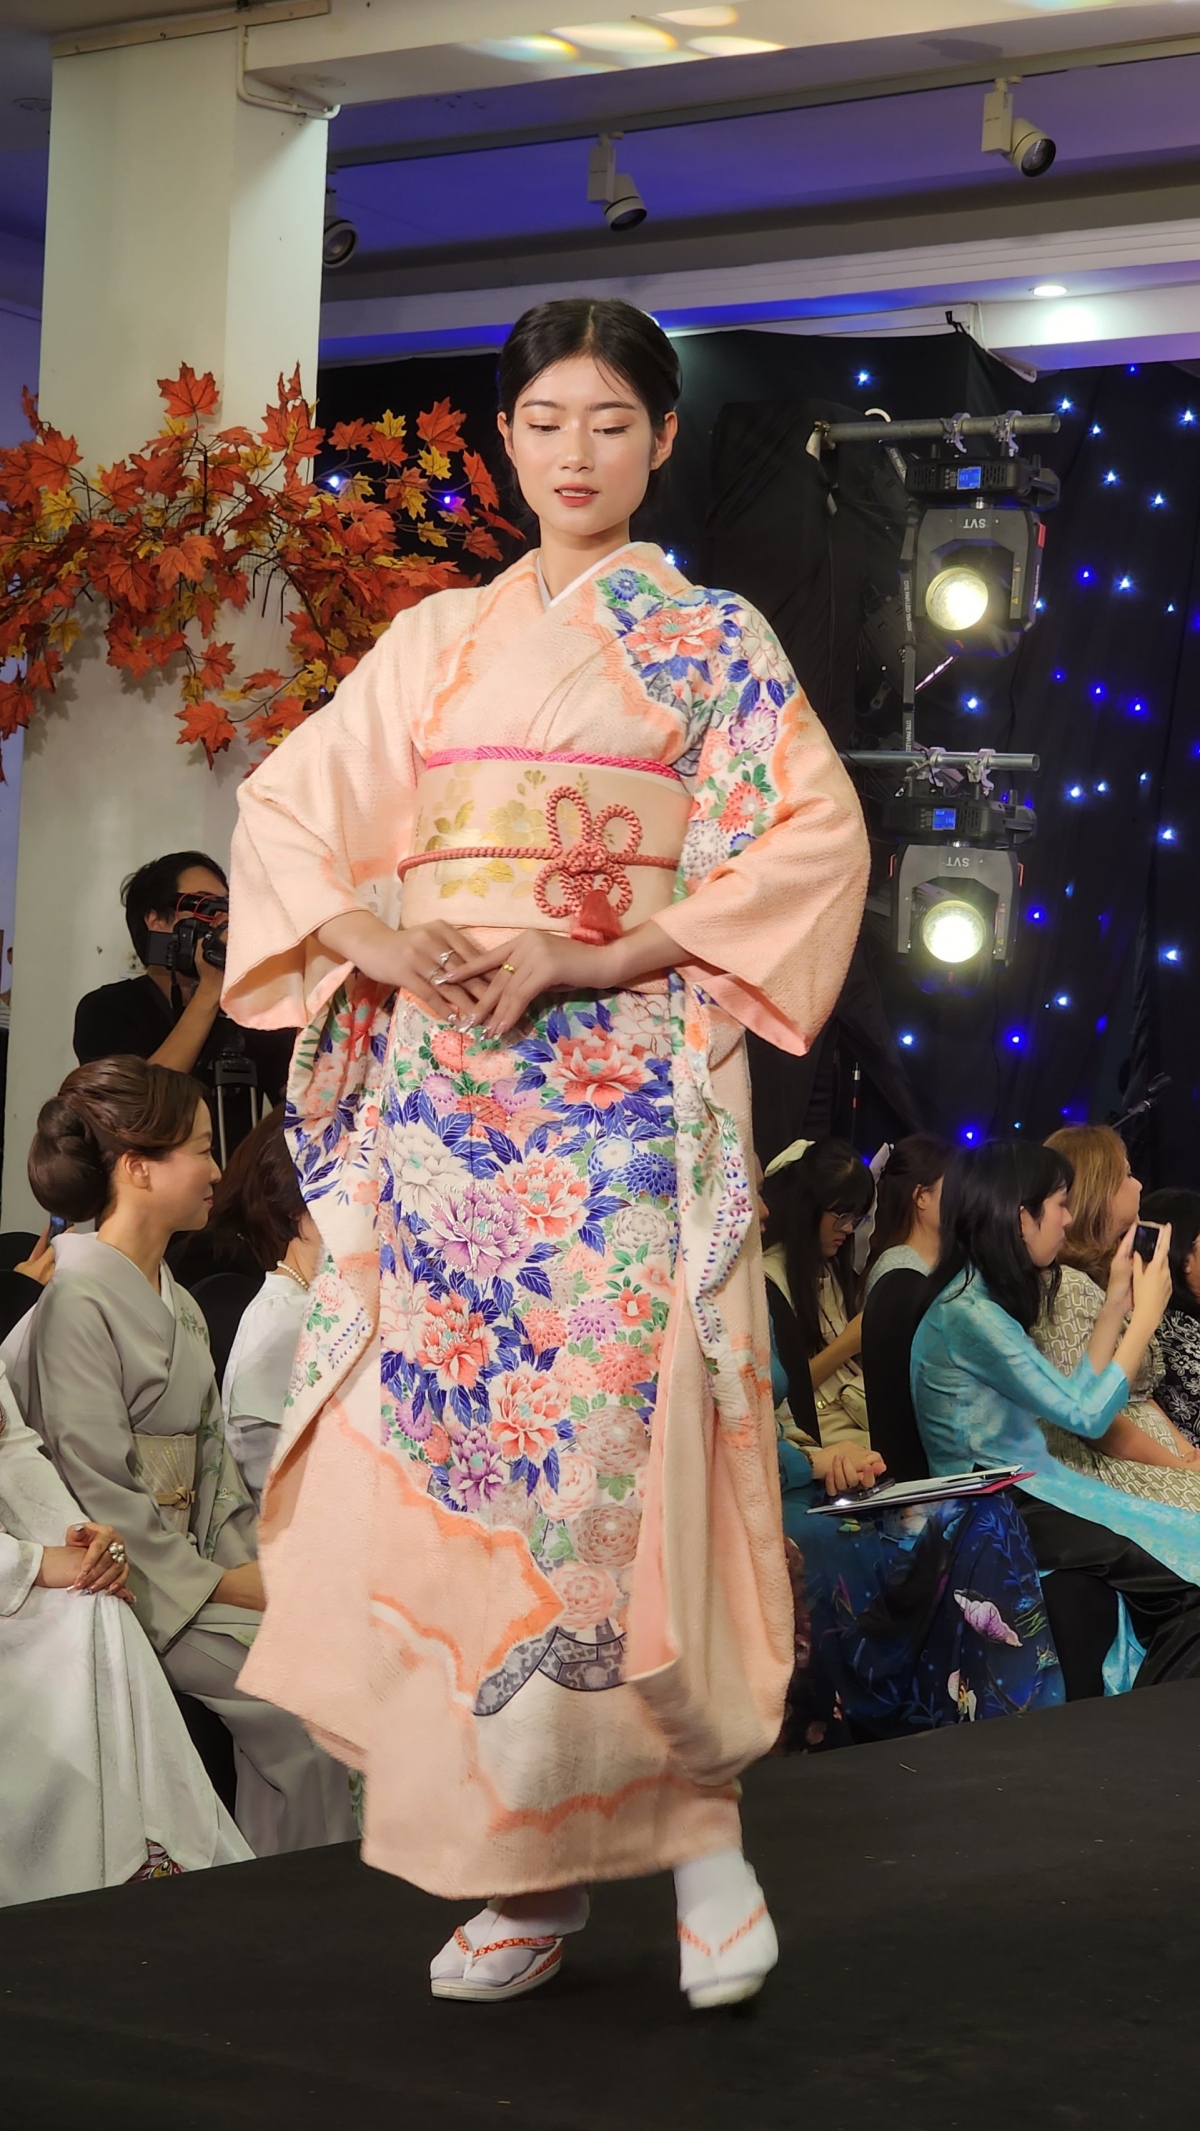 Designer Junko Sophia Kakizaki of Japan presents 10 Kimonos at the event.